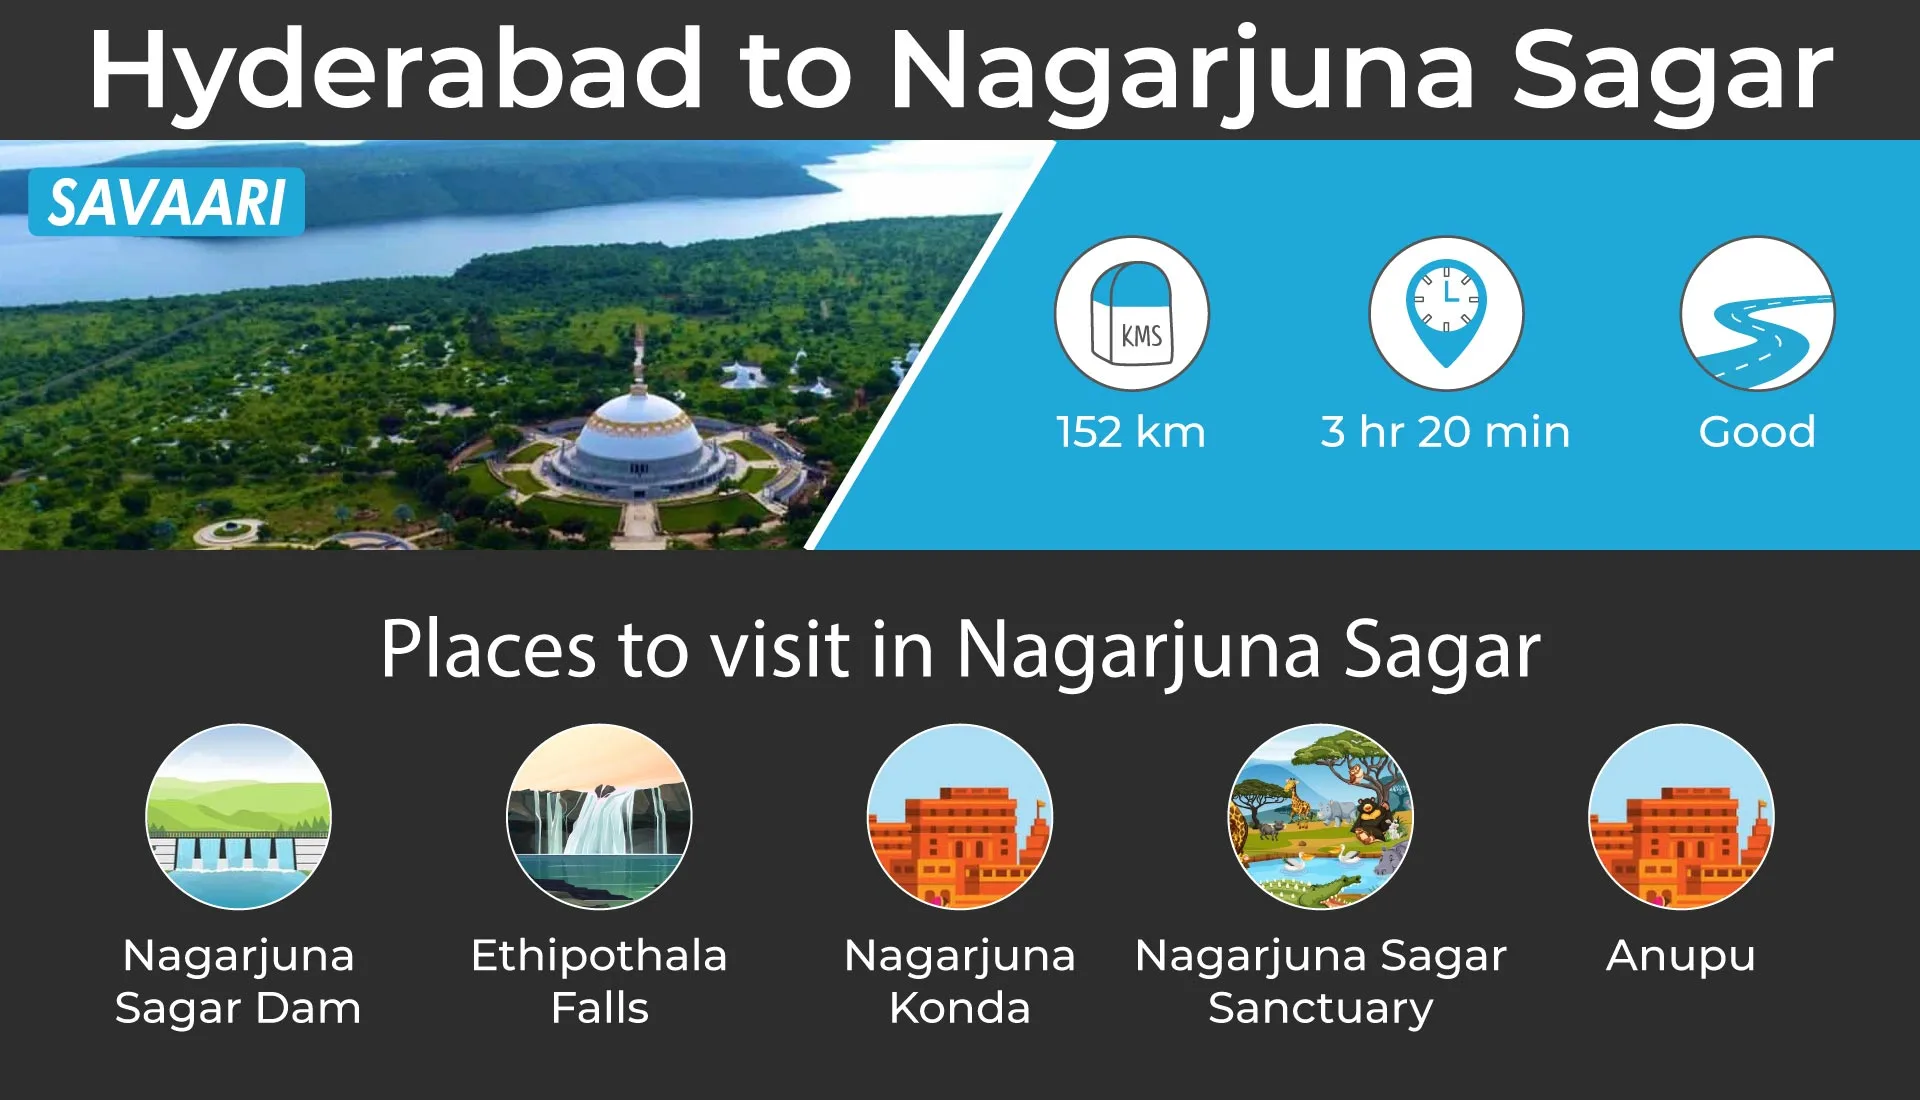 Places to visit near Hyderabad for picnic - Nagarjuna Sagar dam